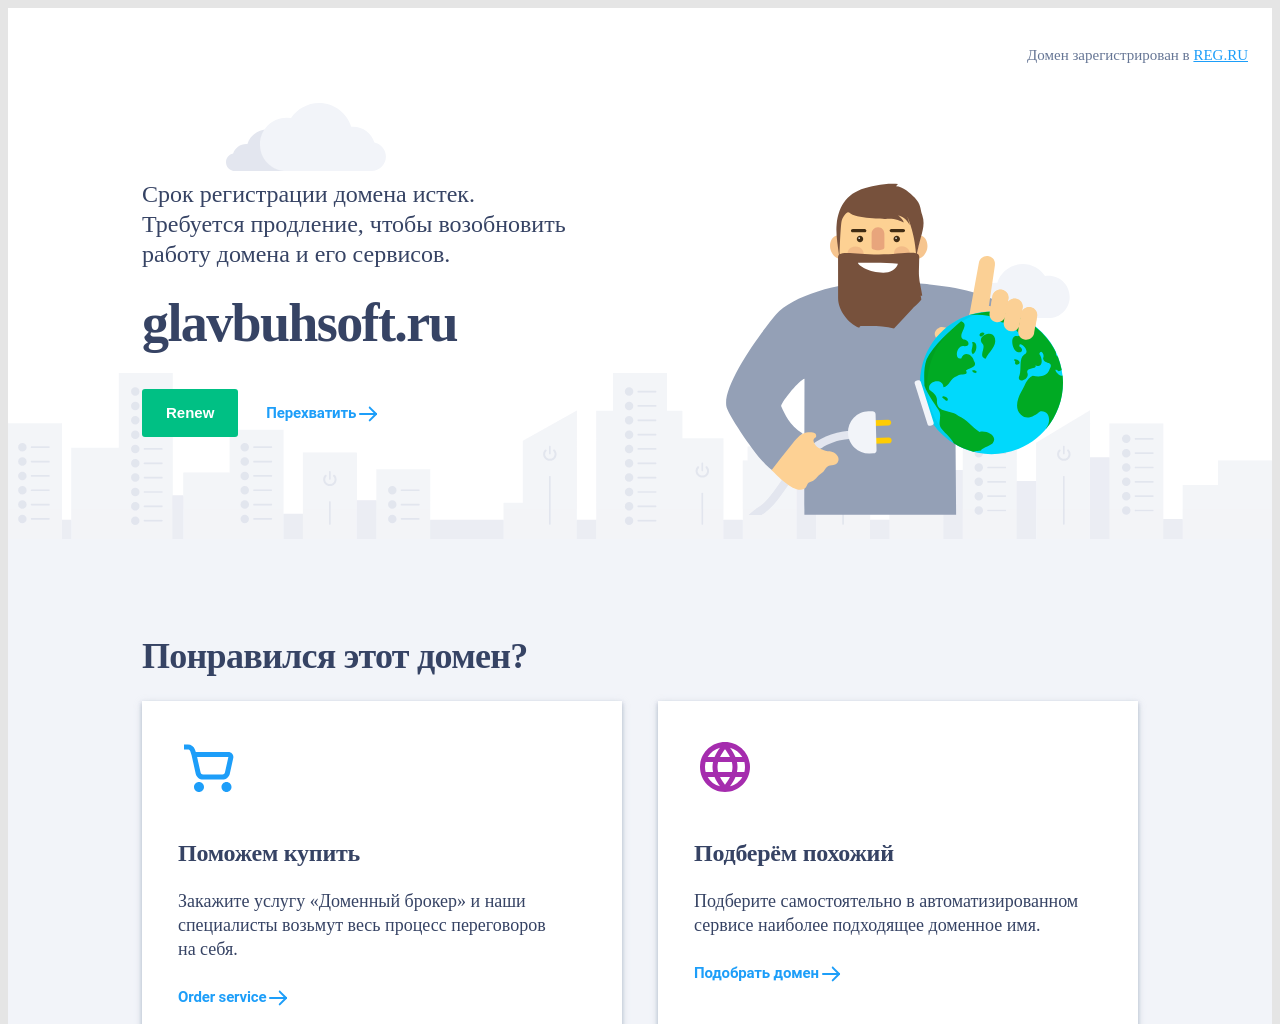 glavbuhsoft.ru